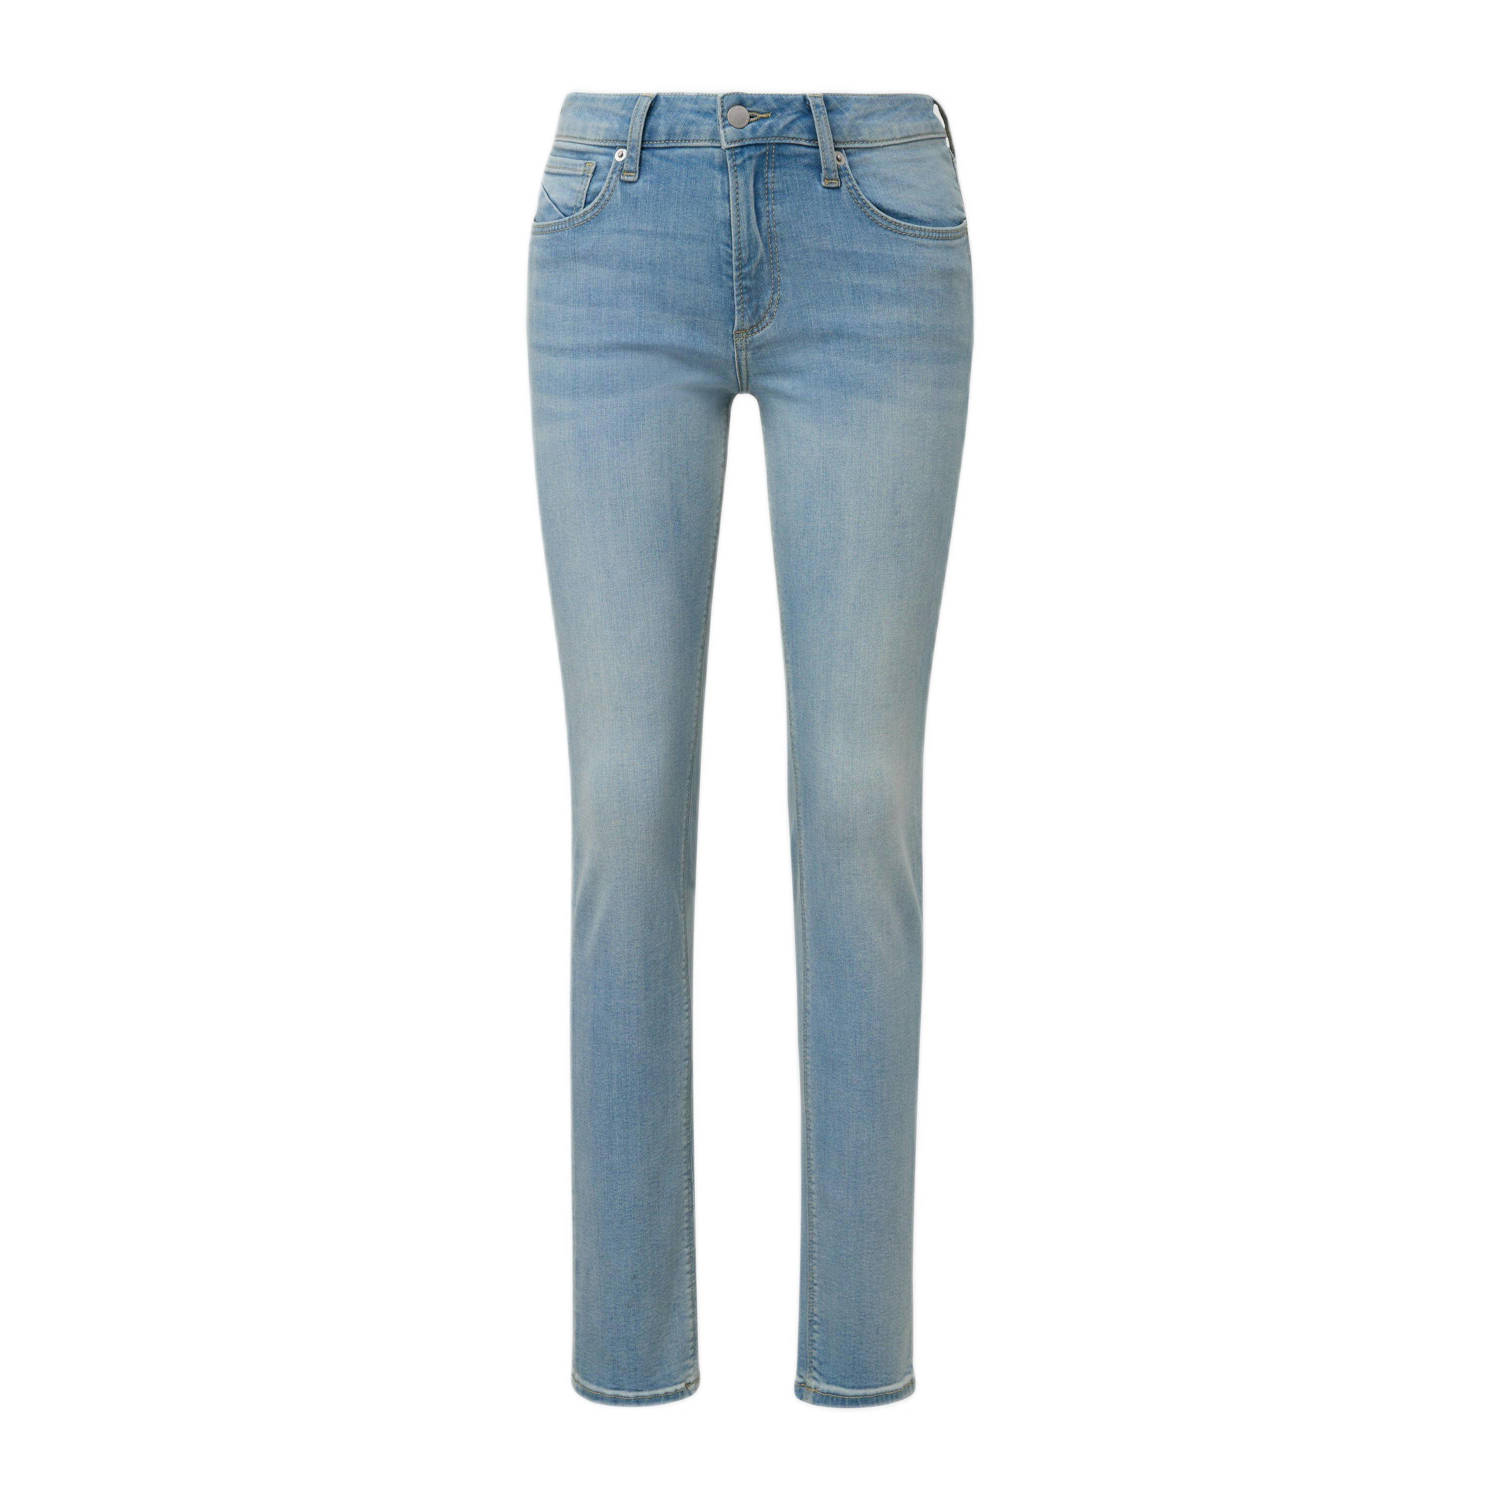 Q S by s.Oliver slim fit jeans light blue